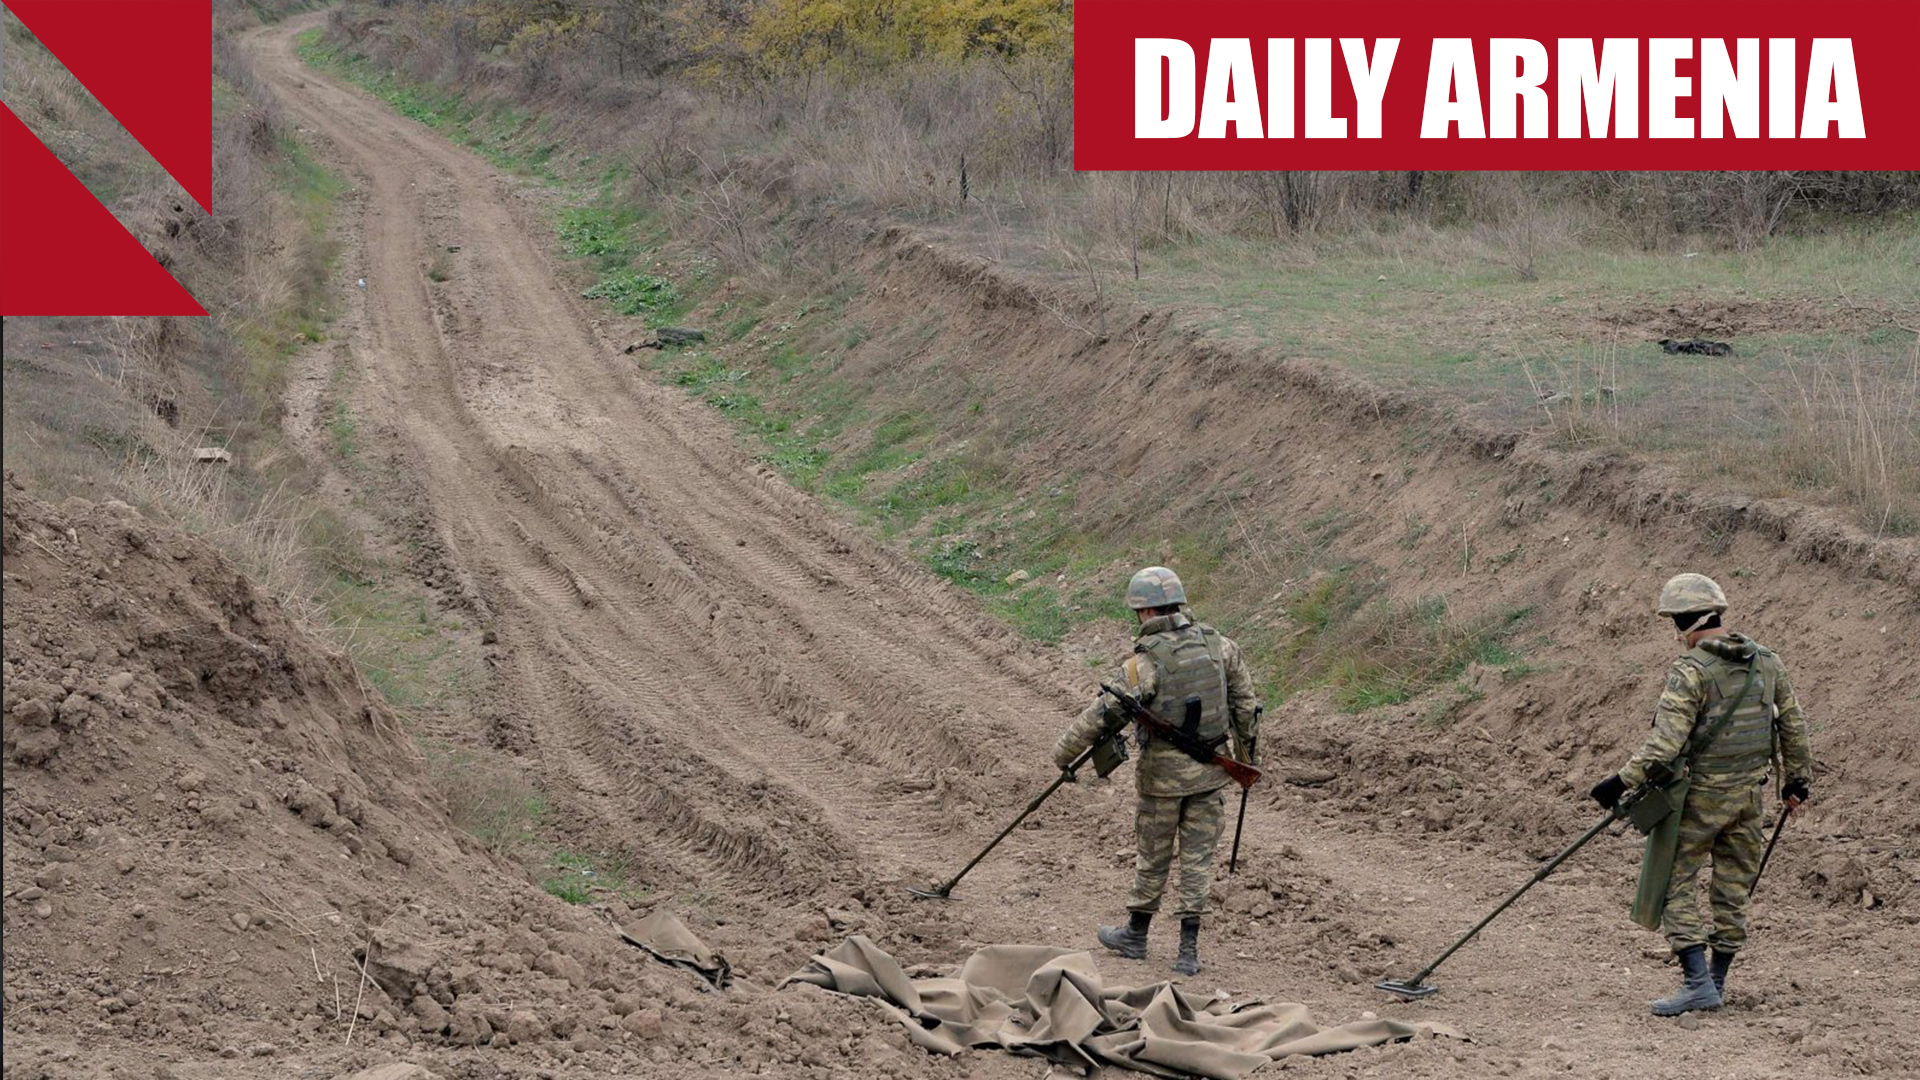 Armenia-to-provide-Azerbaijan-with-new-landmine-maps-in-“confidence-building-step”